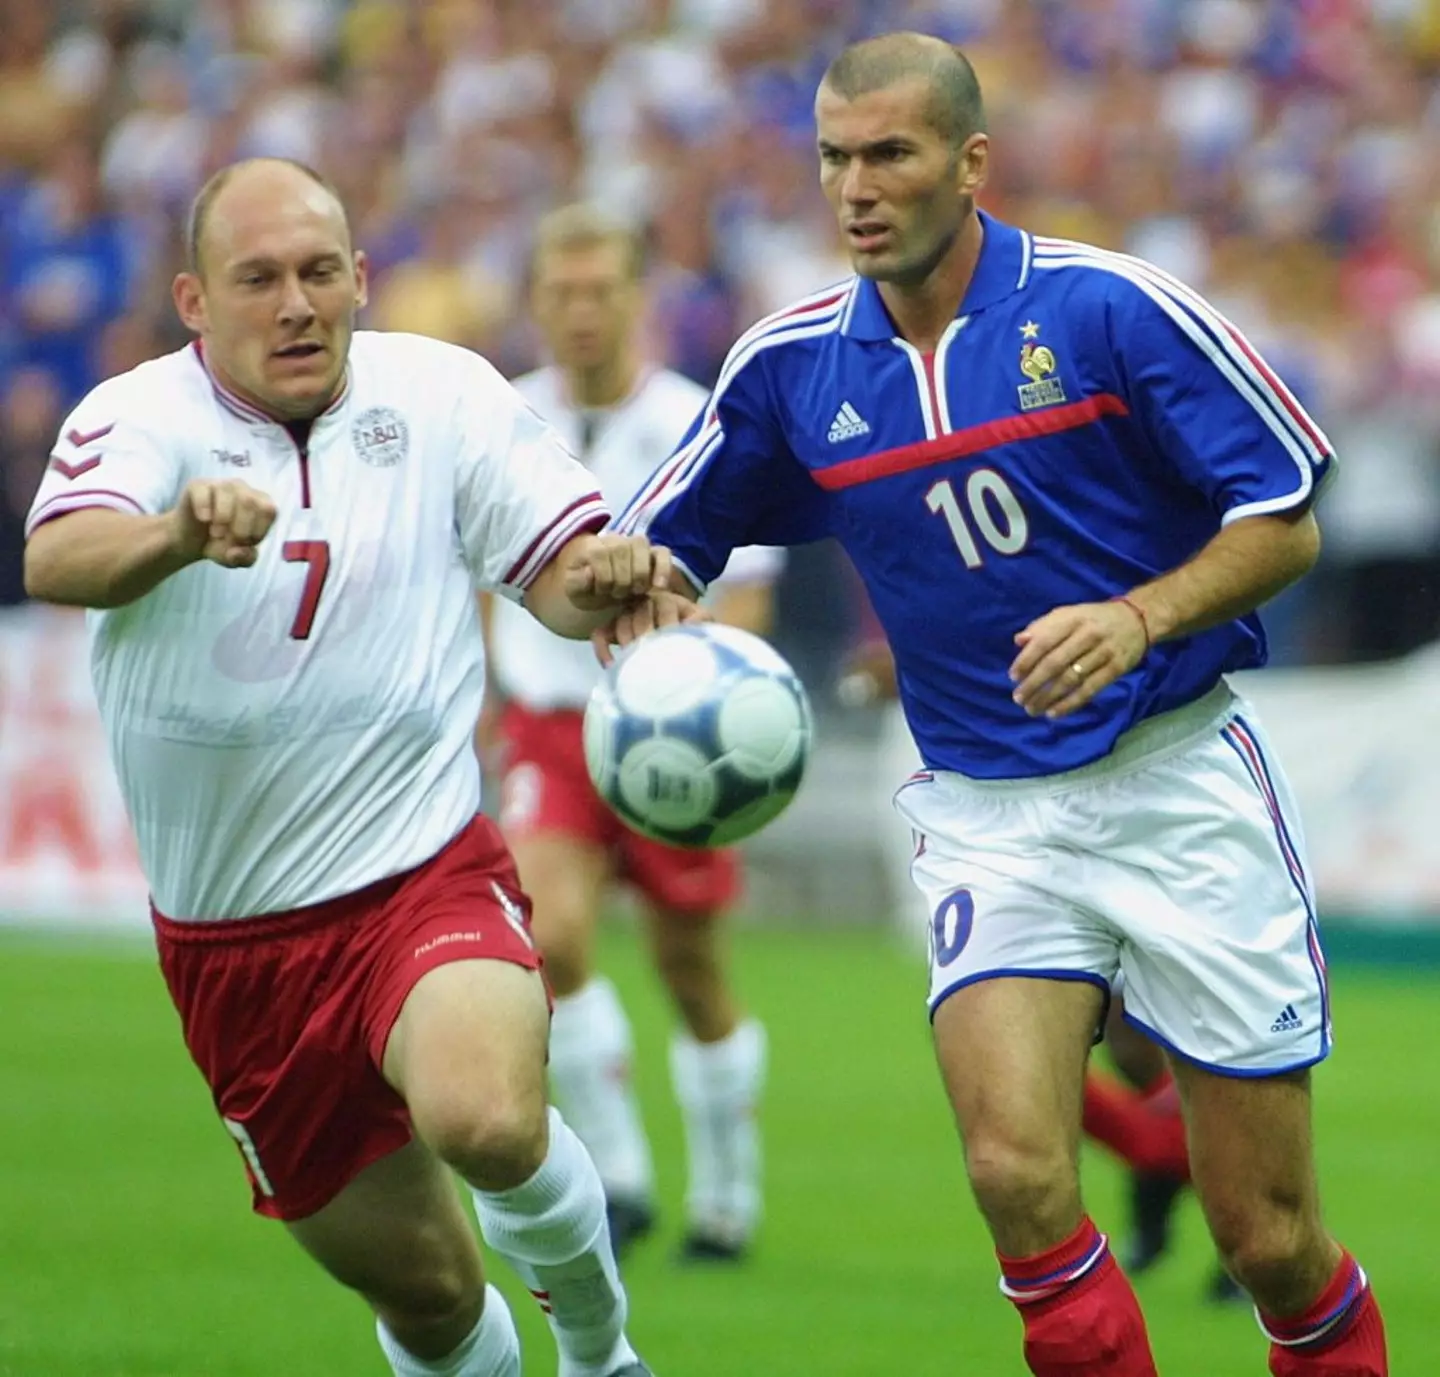 Thomas Gravesen and Zinedine Zidane (Image: Getty)